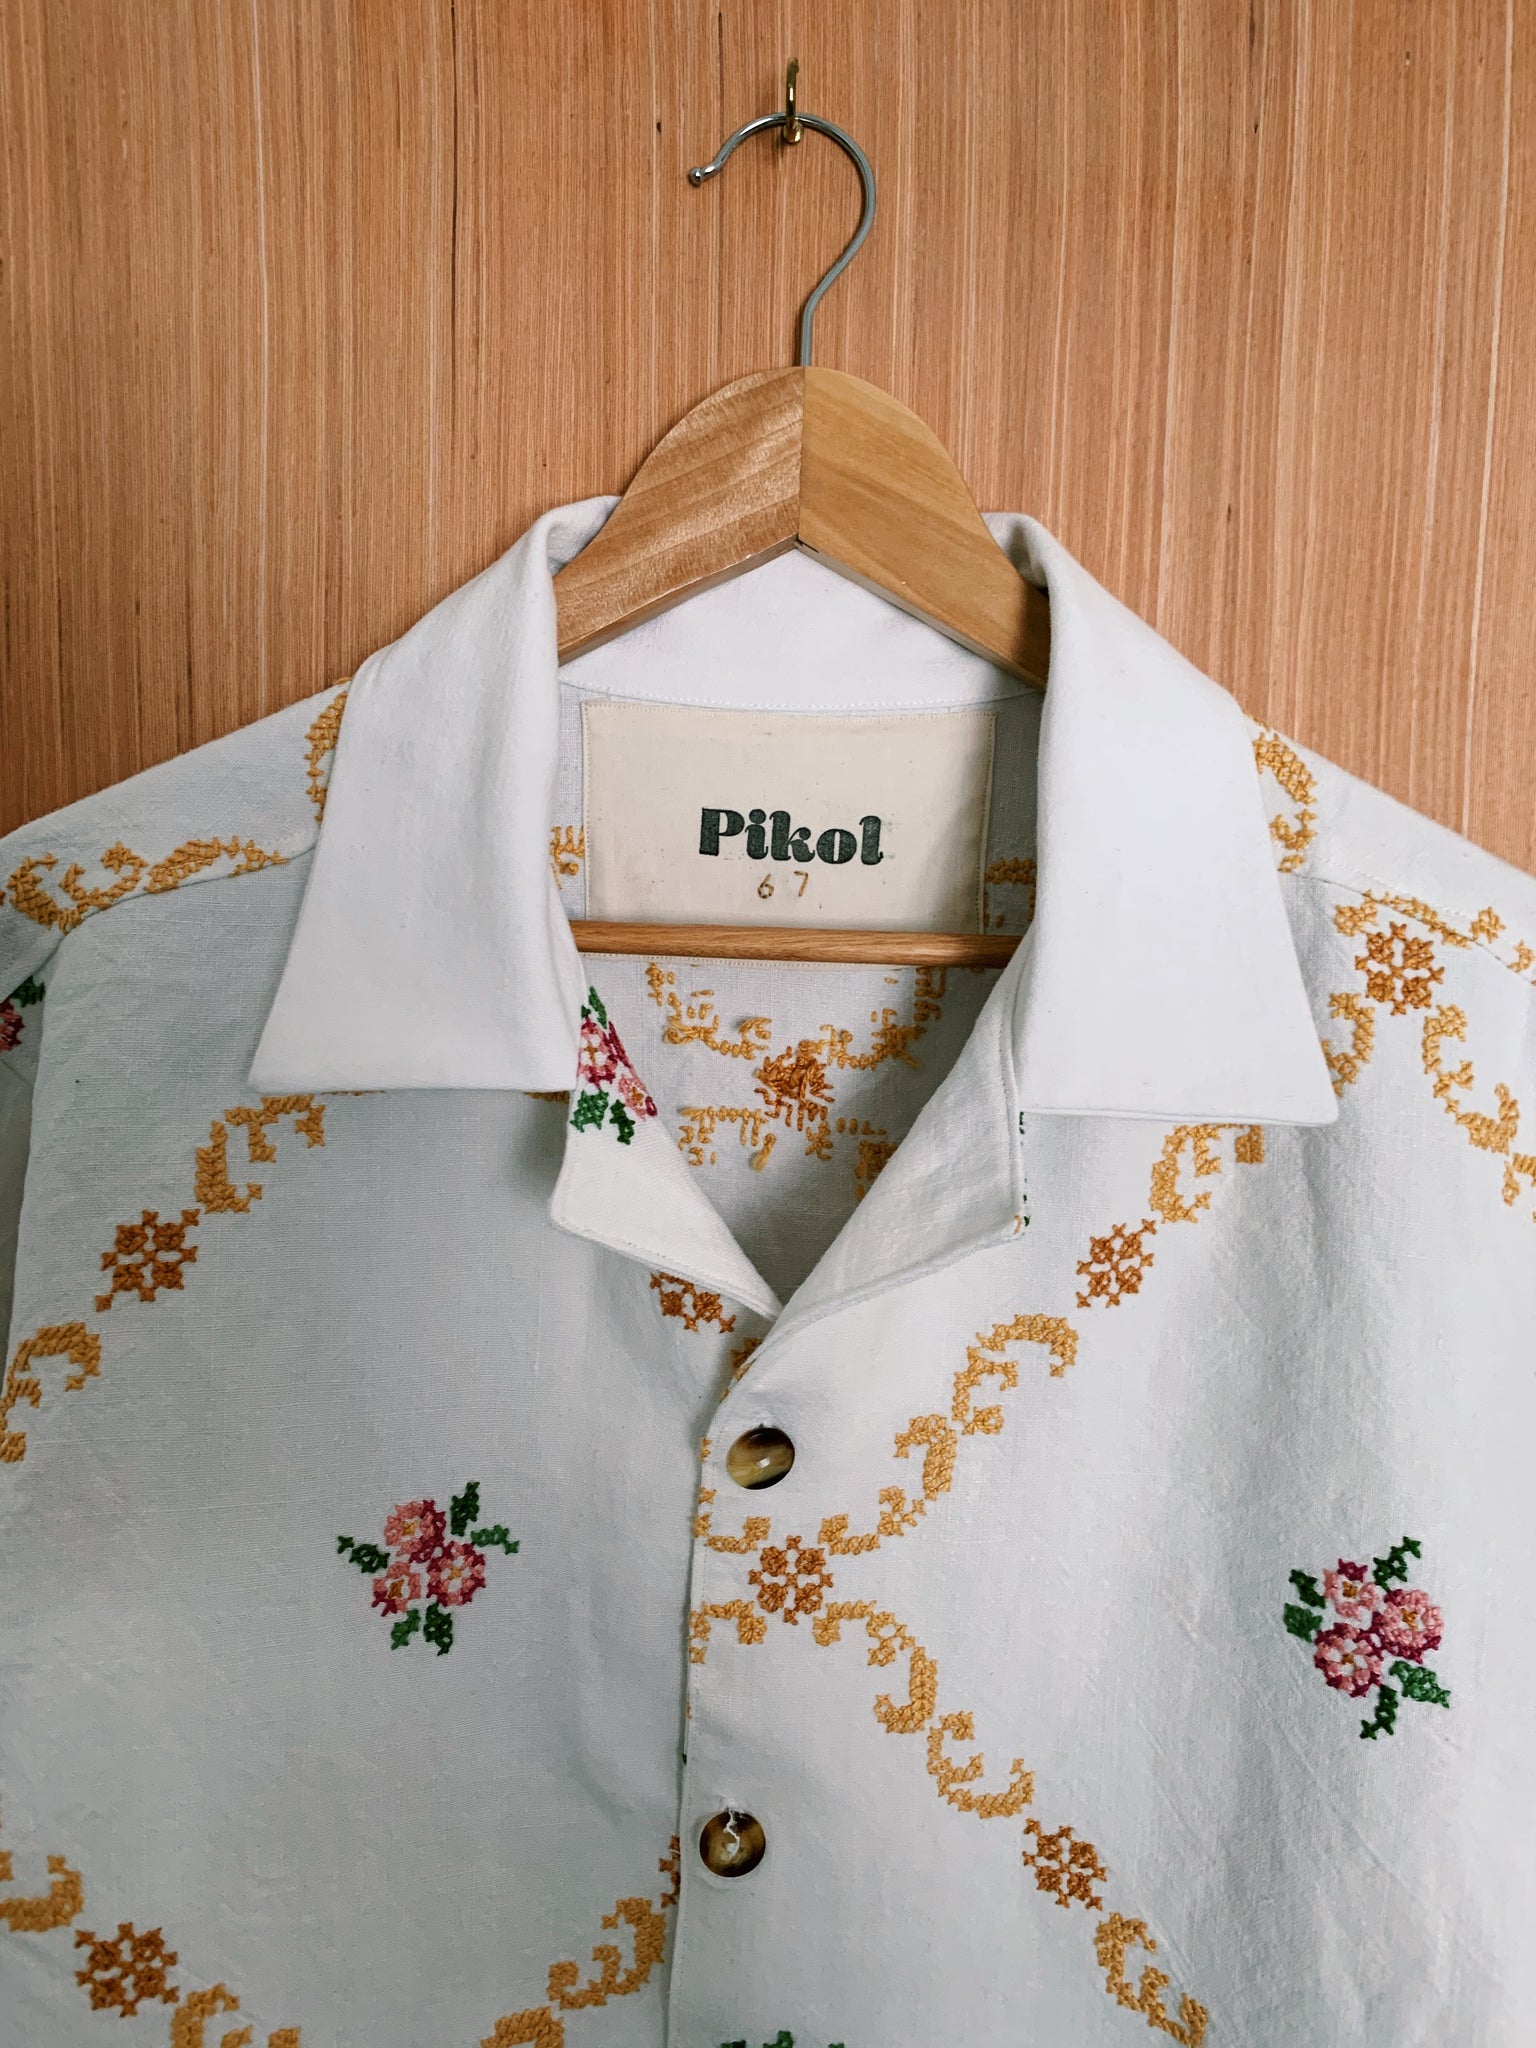 67. Floral Cross-Stitch Overshirt